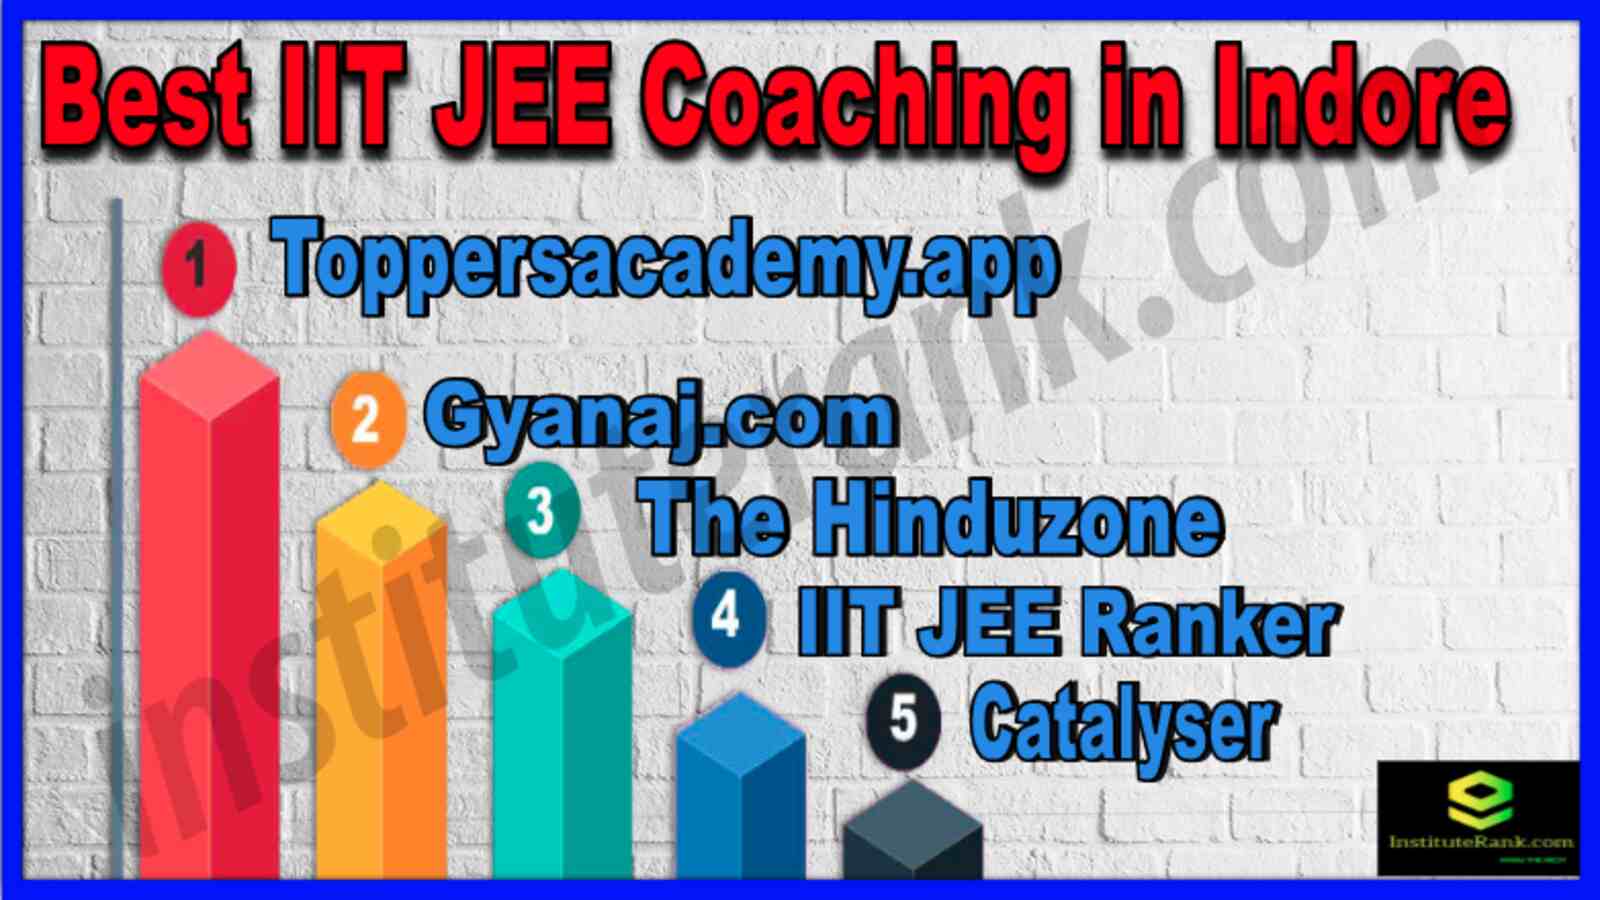 Top 10 IIT JEE Coaching In Indore